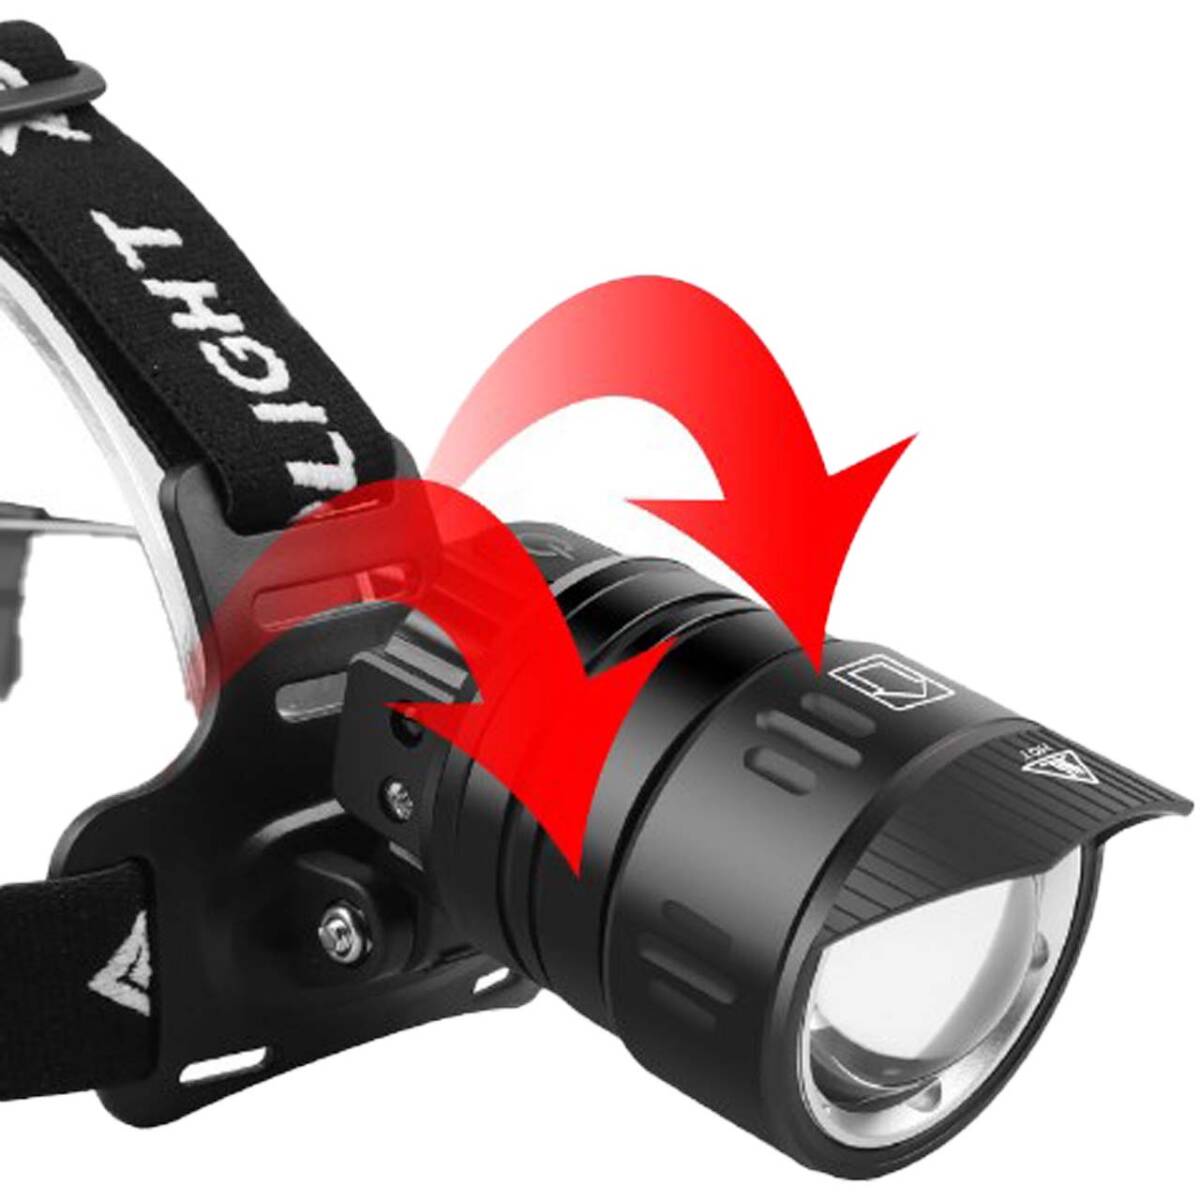 LED ヘッドライト 充電池 充電式 明るい 登山 釣り 夜釣り キャンプ アウトドア 防災 災害 非常用 懐中電灯 ワークライト 驚愕白黒セット01の画像3